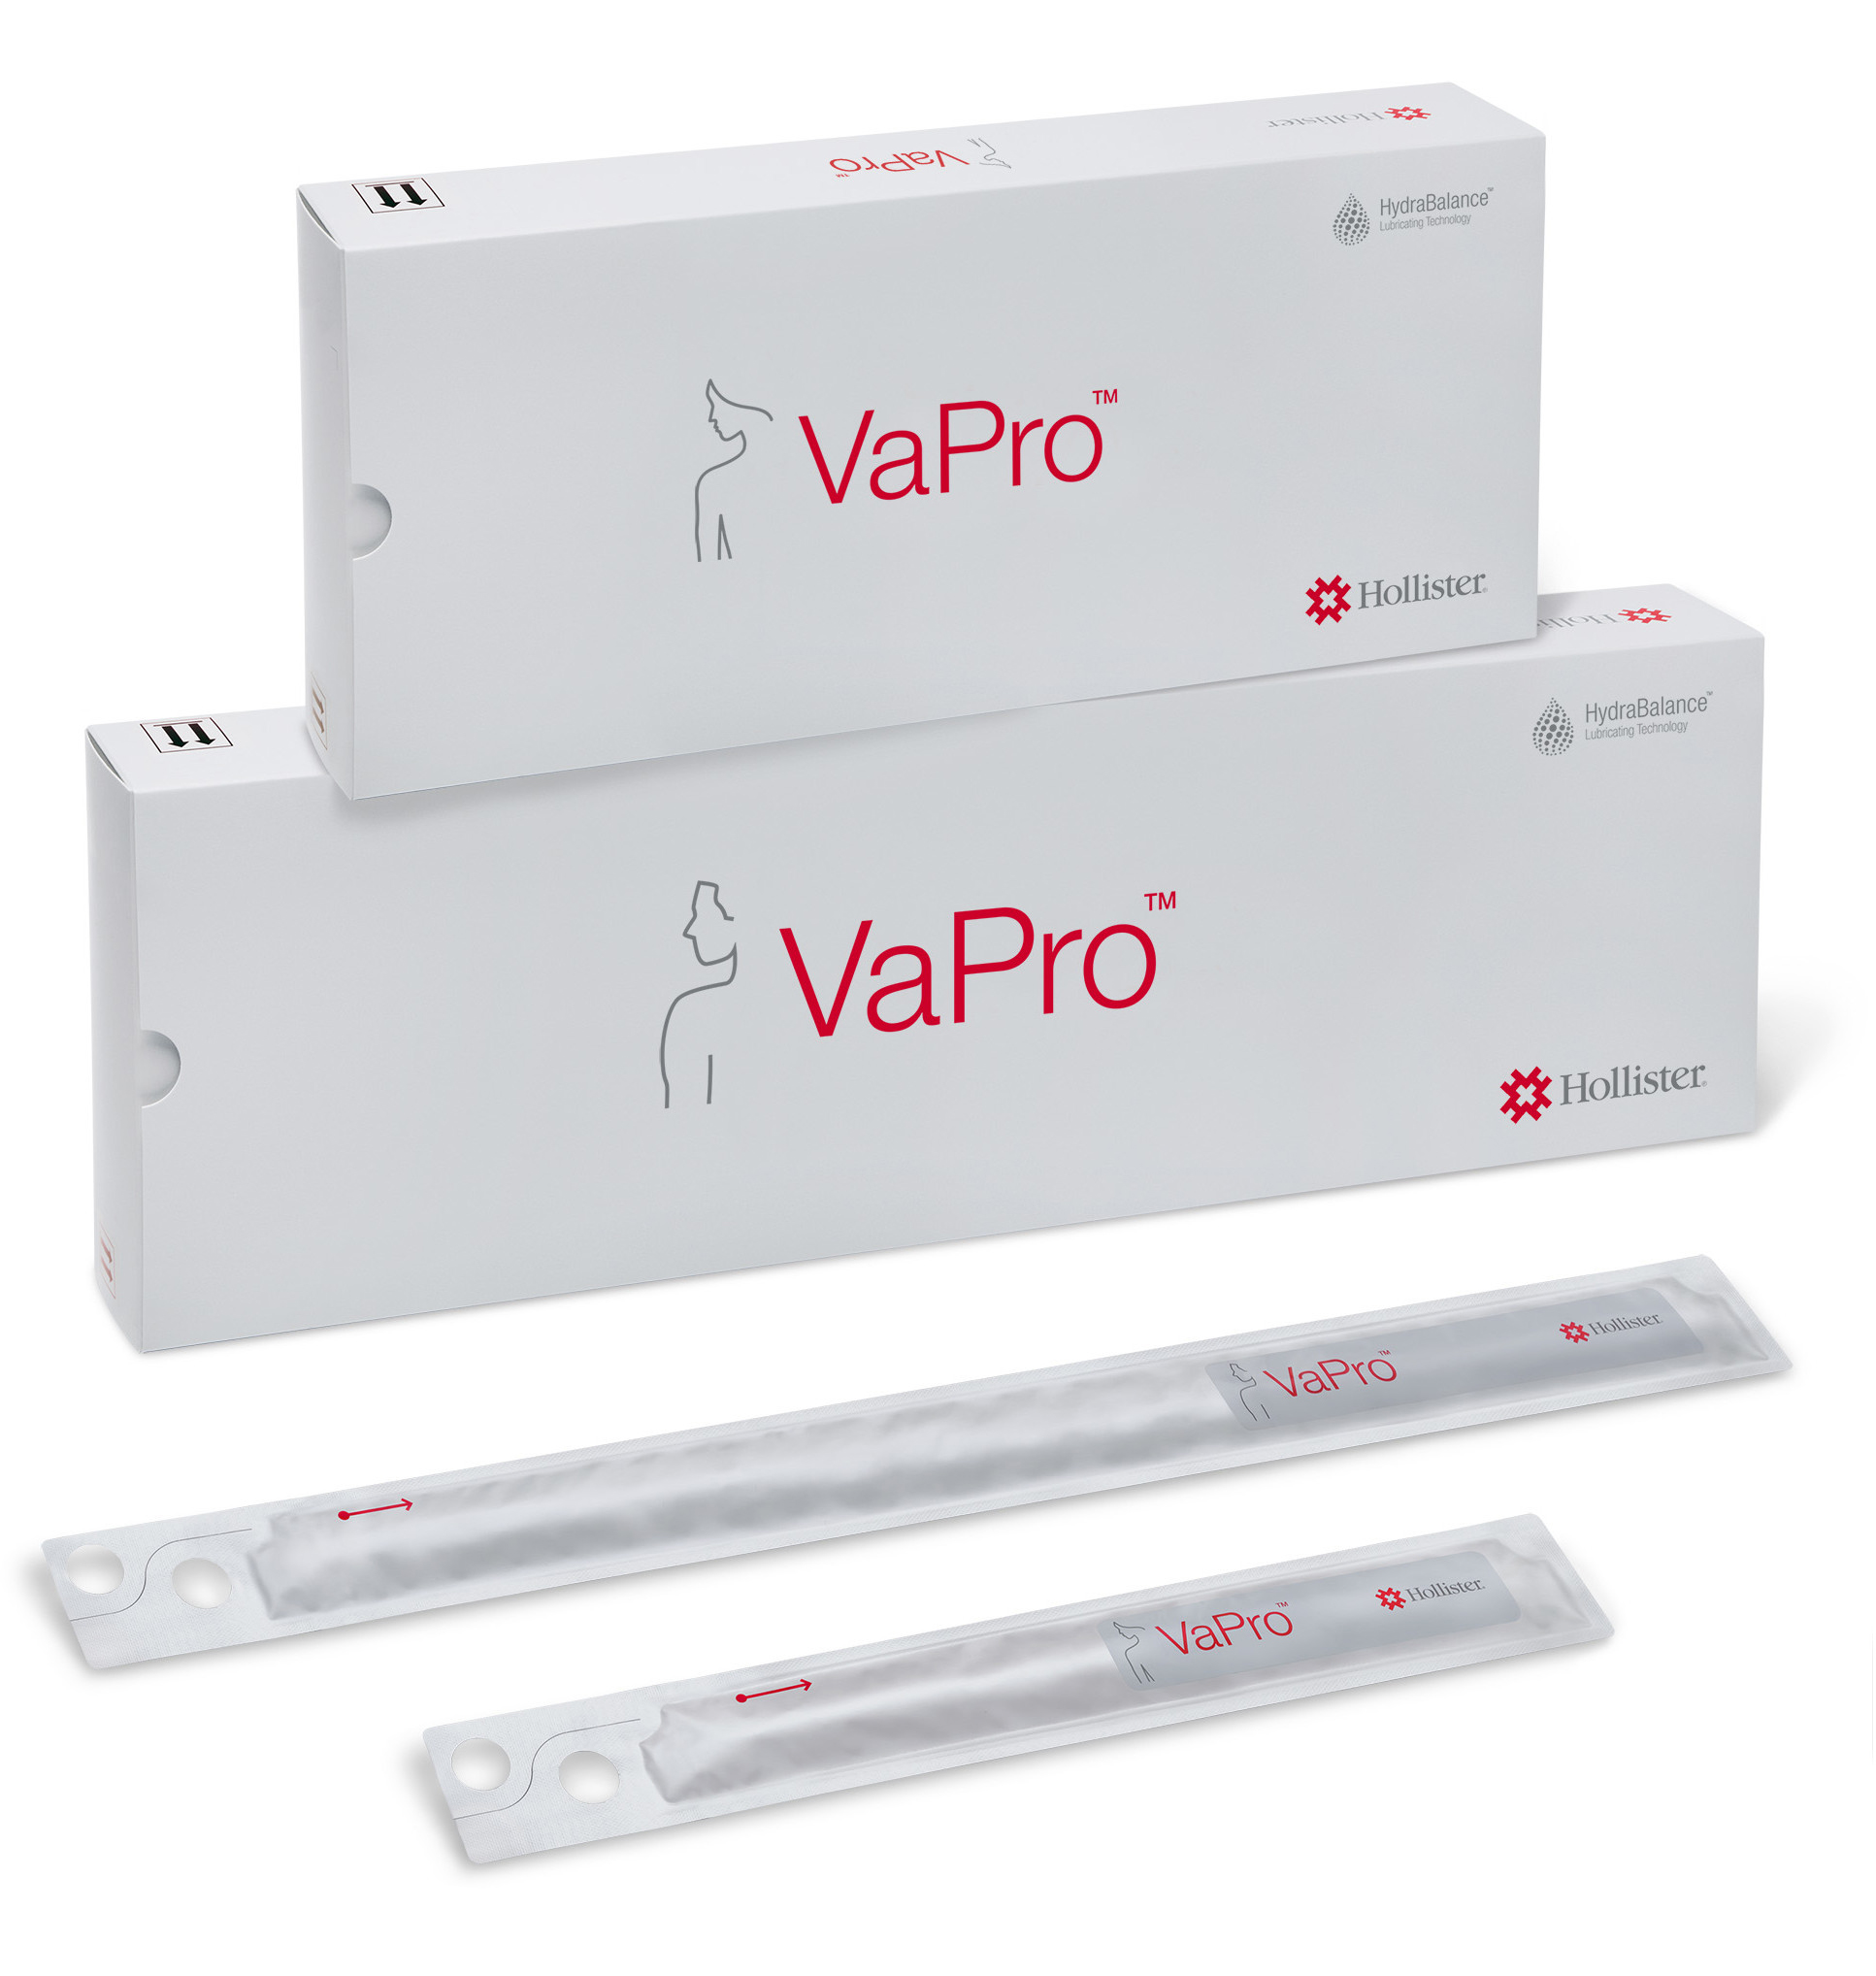 VaPro Plus Pocket packaging